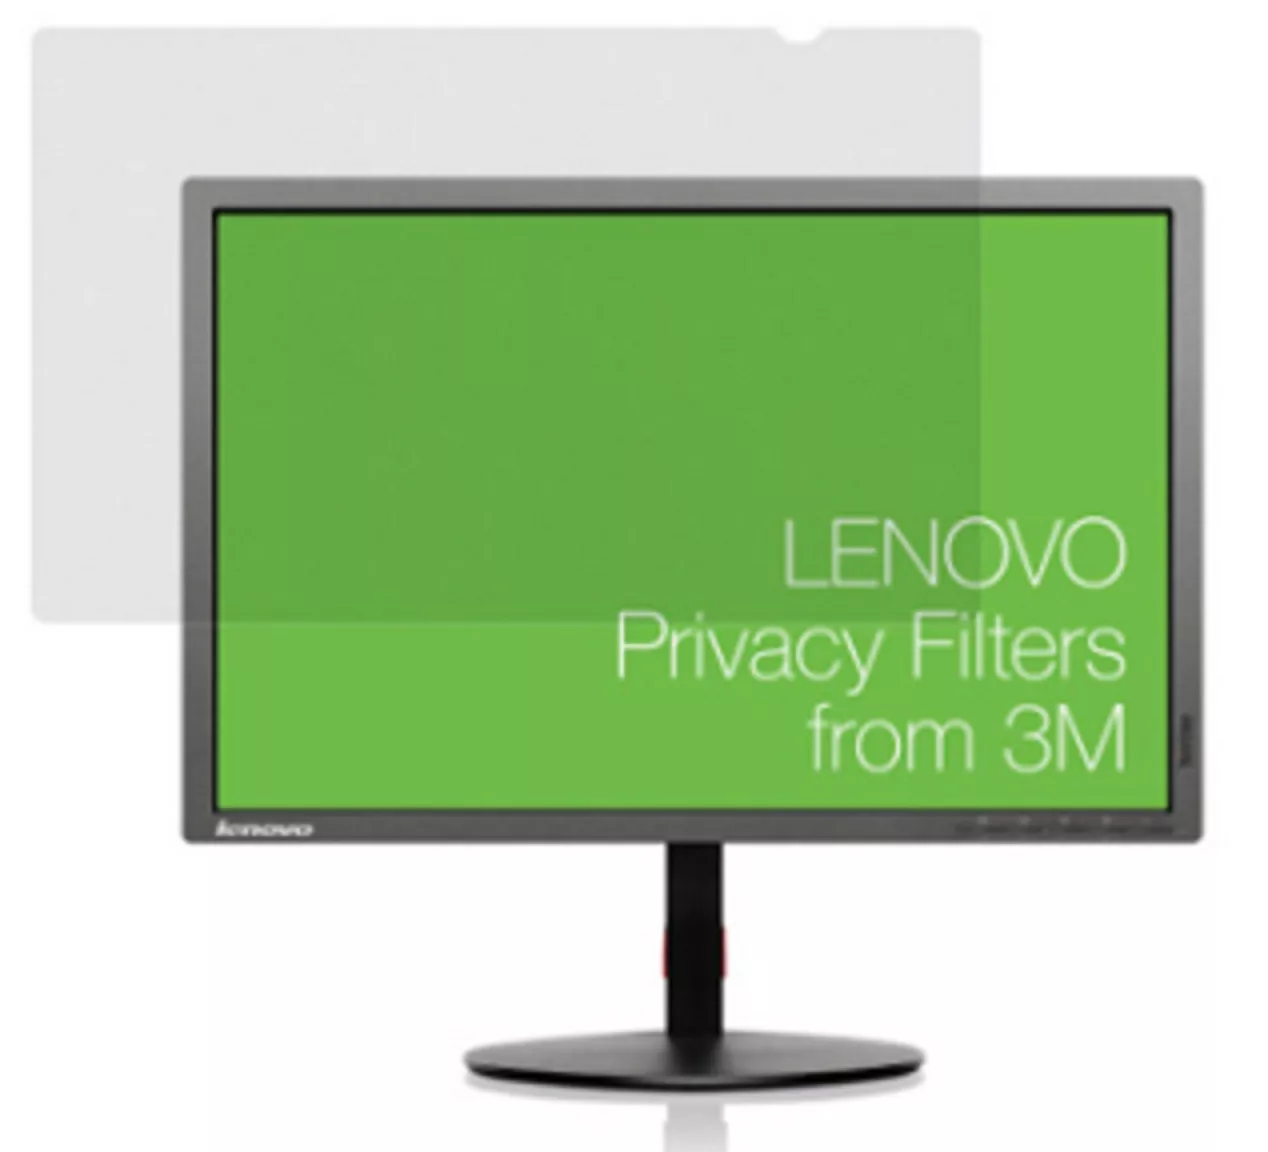 Revendeur officiel Lenovo 4XJ0L59639